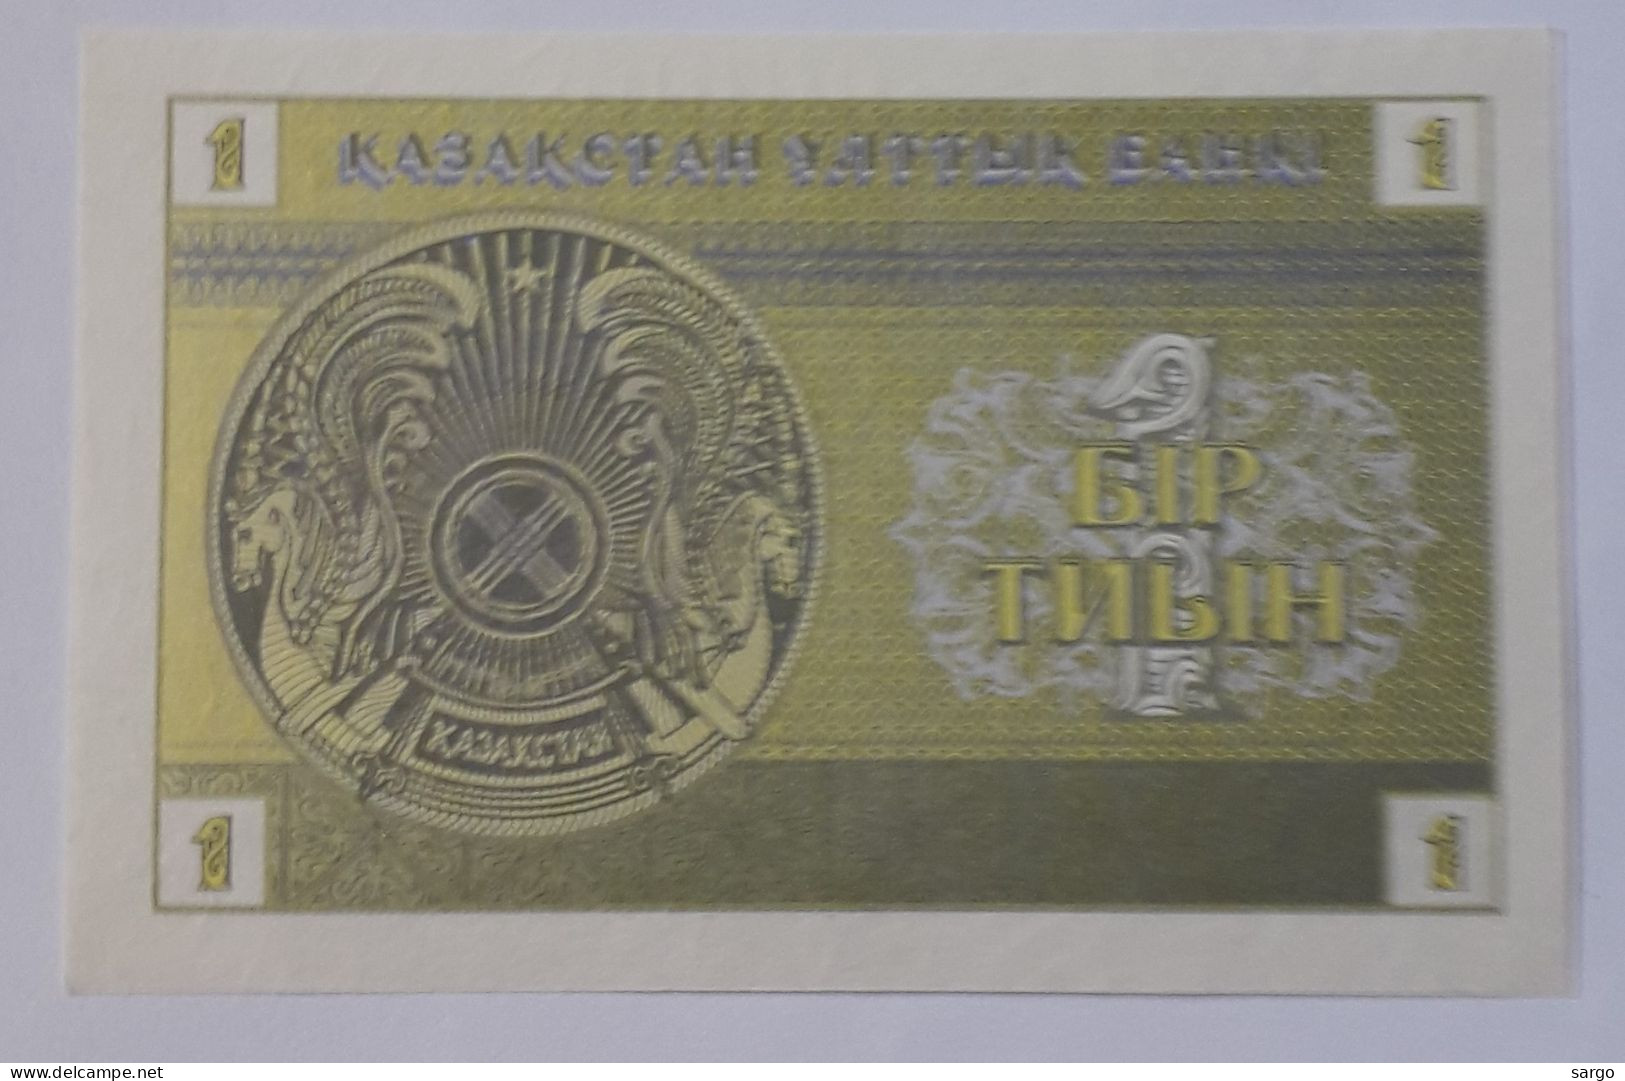 KAZAKHSTAN - 1 TYIN - 1993 - P 1 - UNC - BANKNOTES - PAPER MONEY - CARTAMONETA - - Kazakhstan